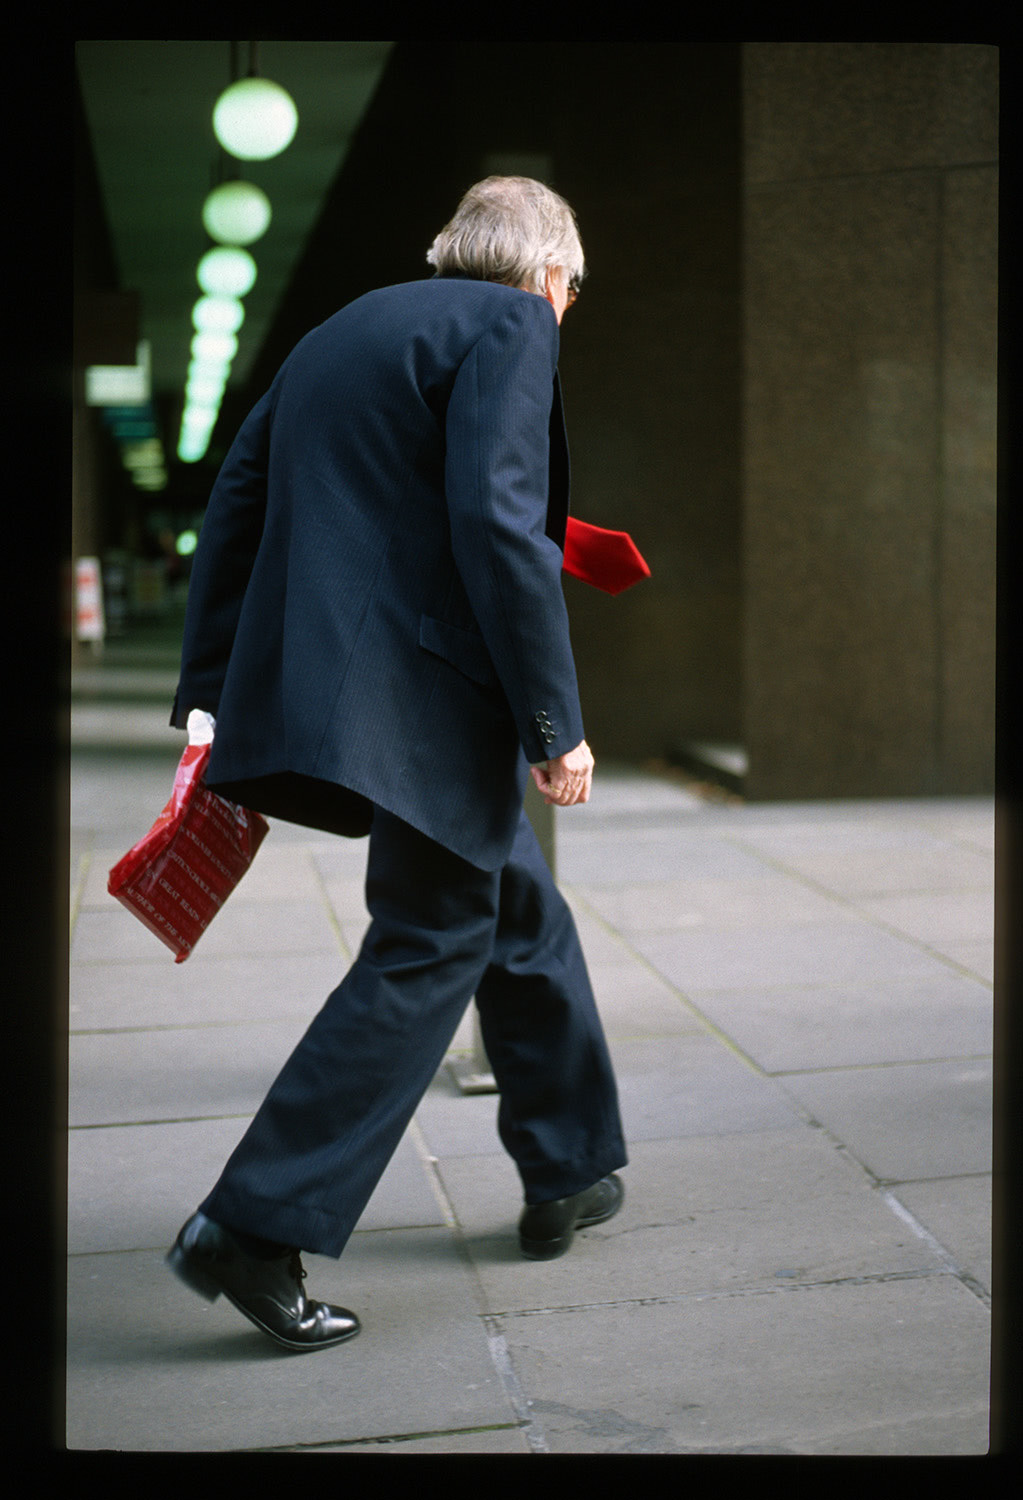 Old man in suit walking Melbourne